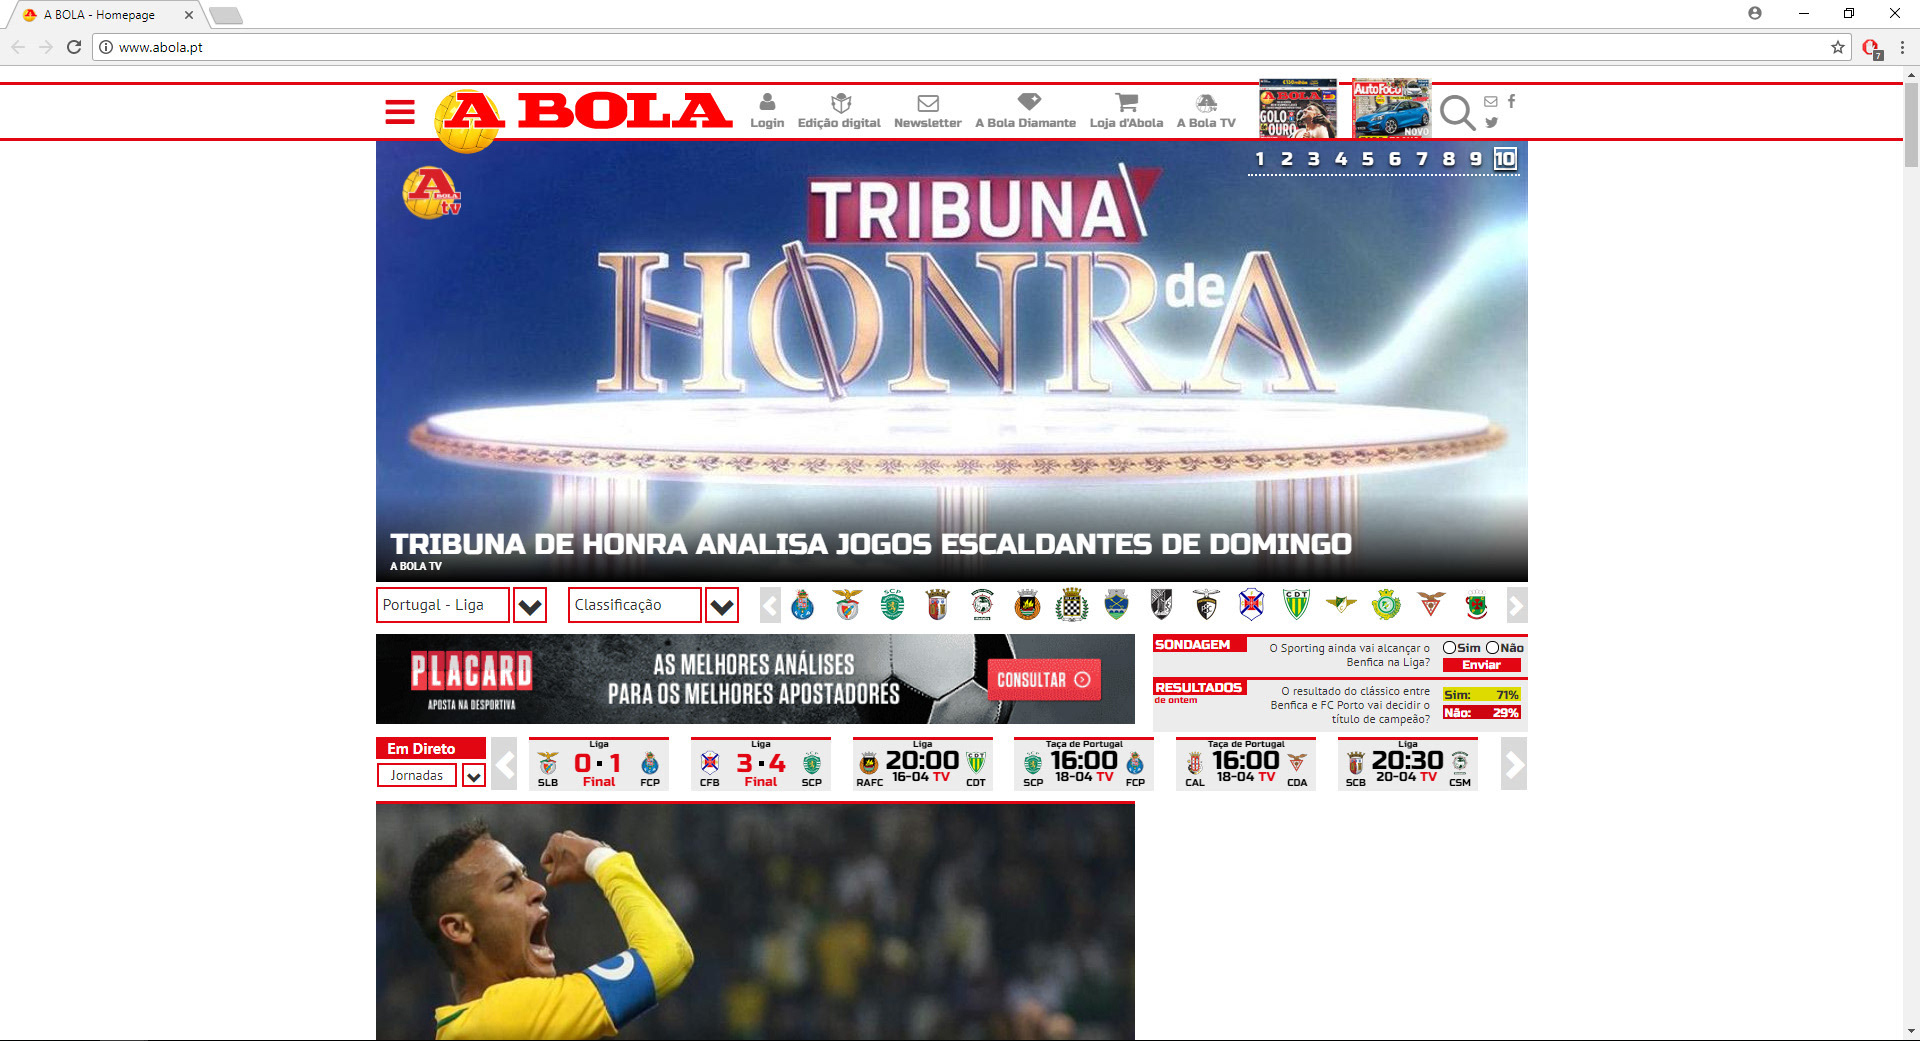 A BOLA - Homepage